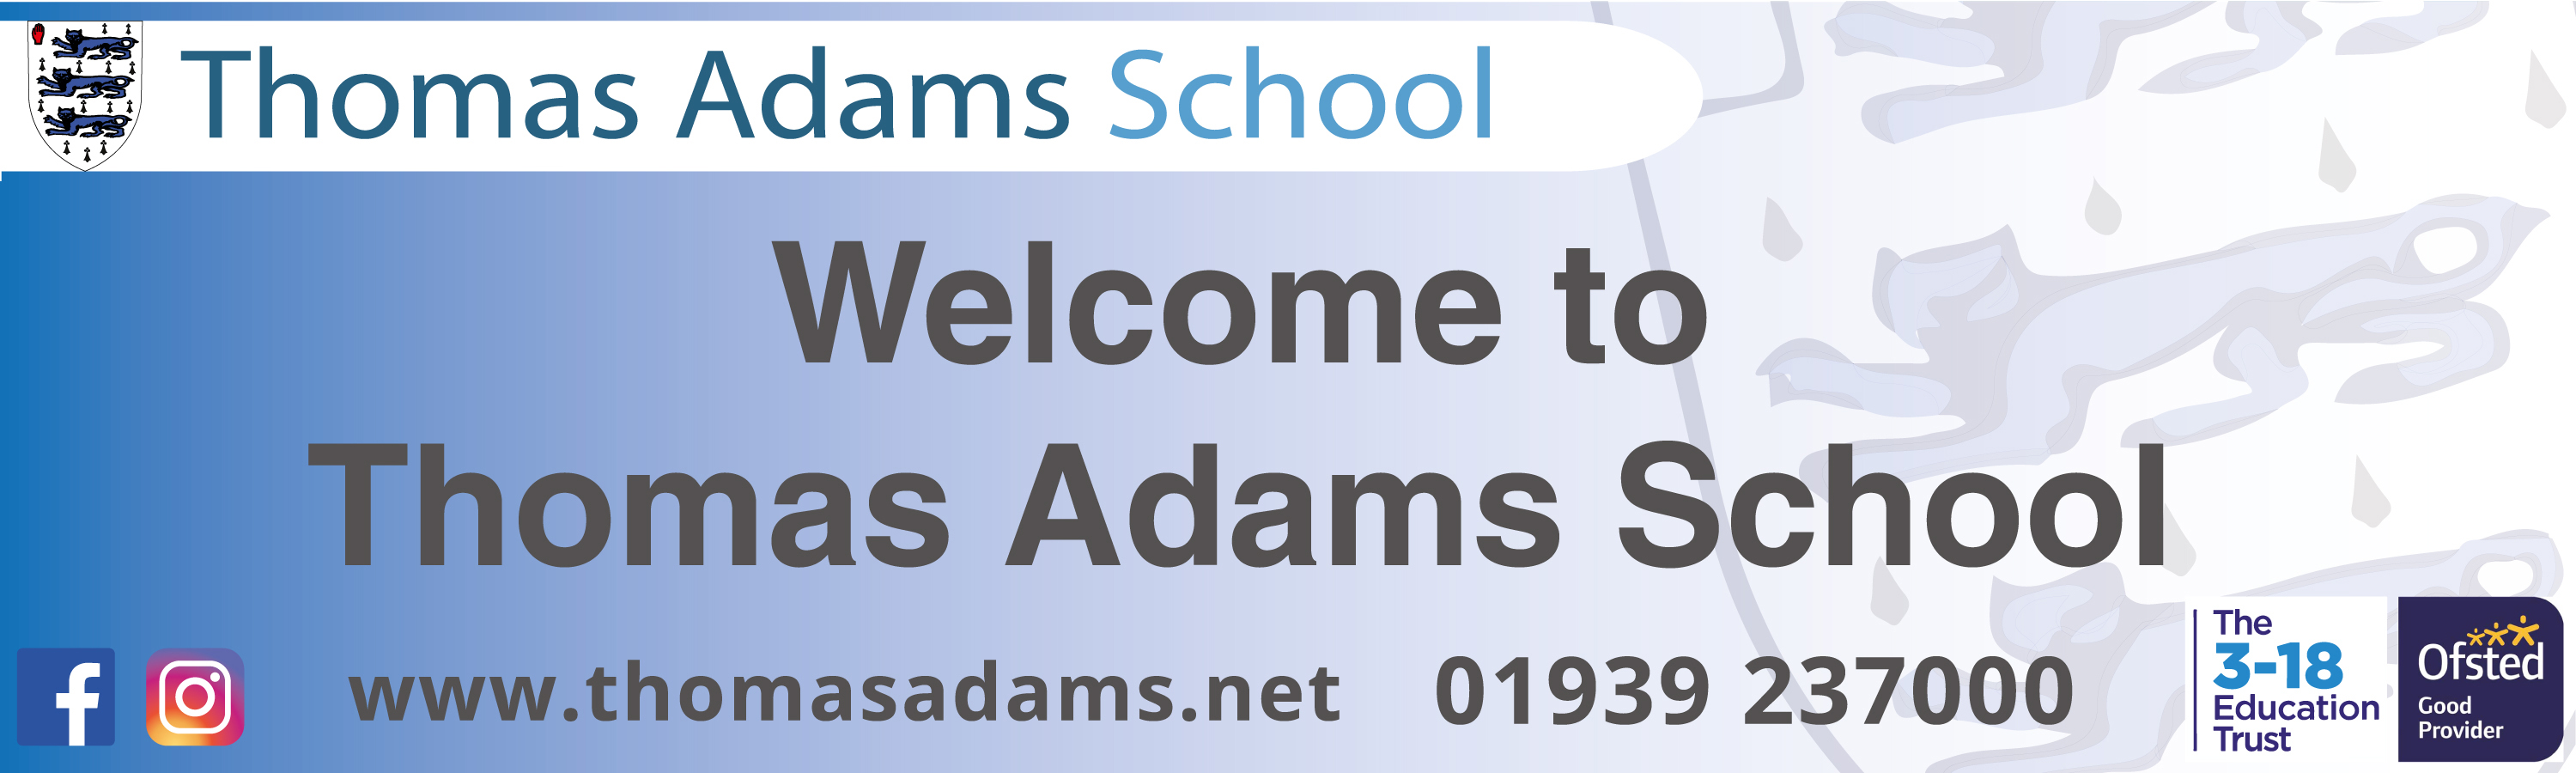 Thomas Adams School Banner